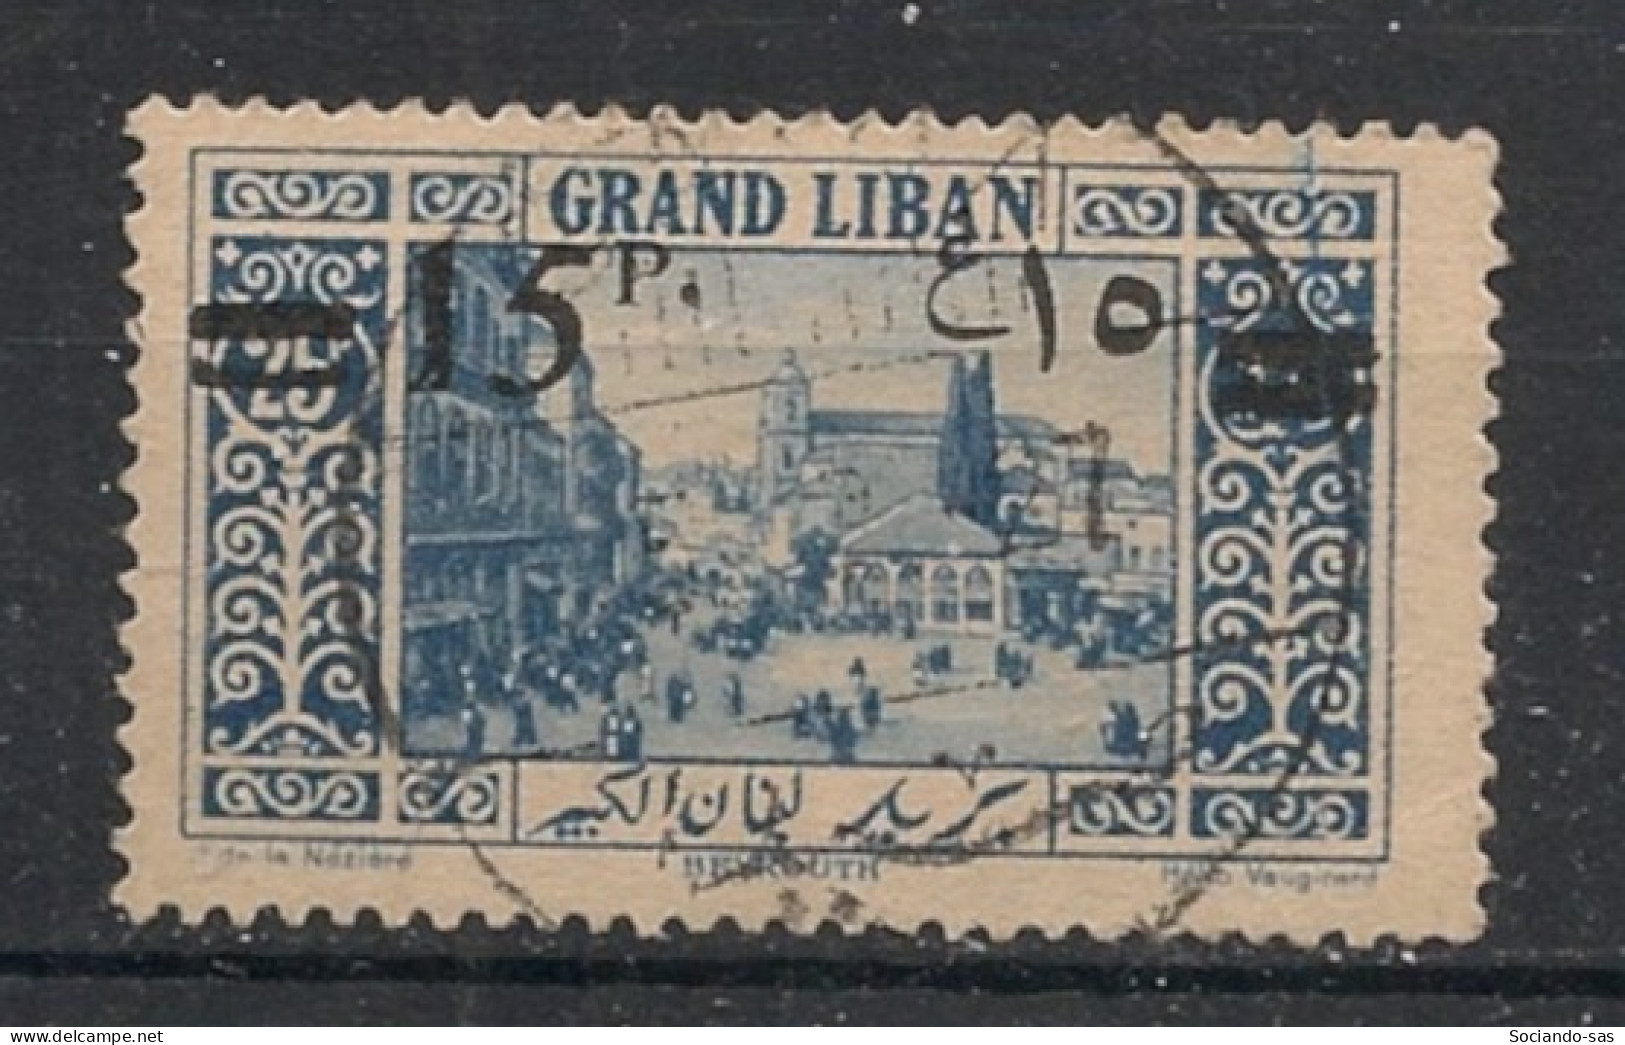 GRAND LIBAN - 1926 - N°YT. 79 - 15pi Sur 25pi Bleu - Oblitéré / Used - Oblitérés